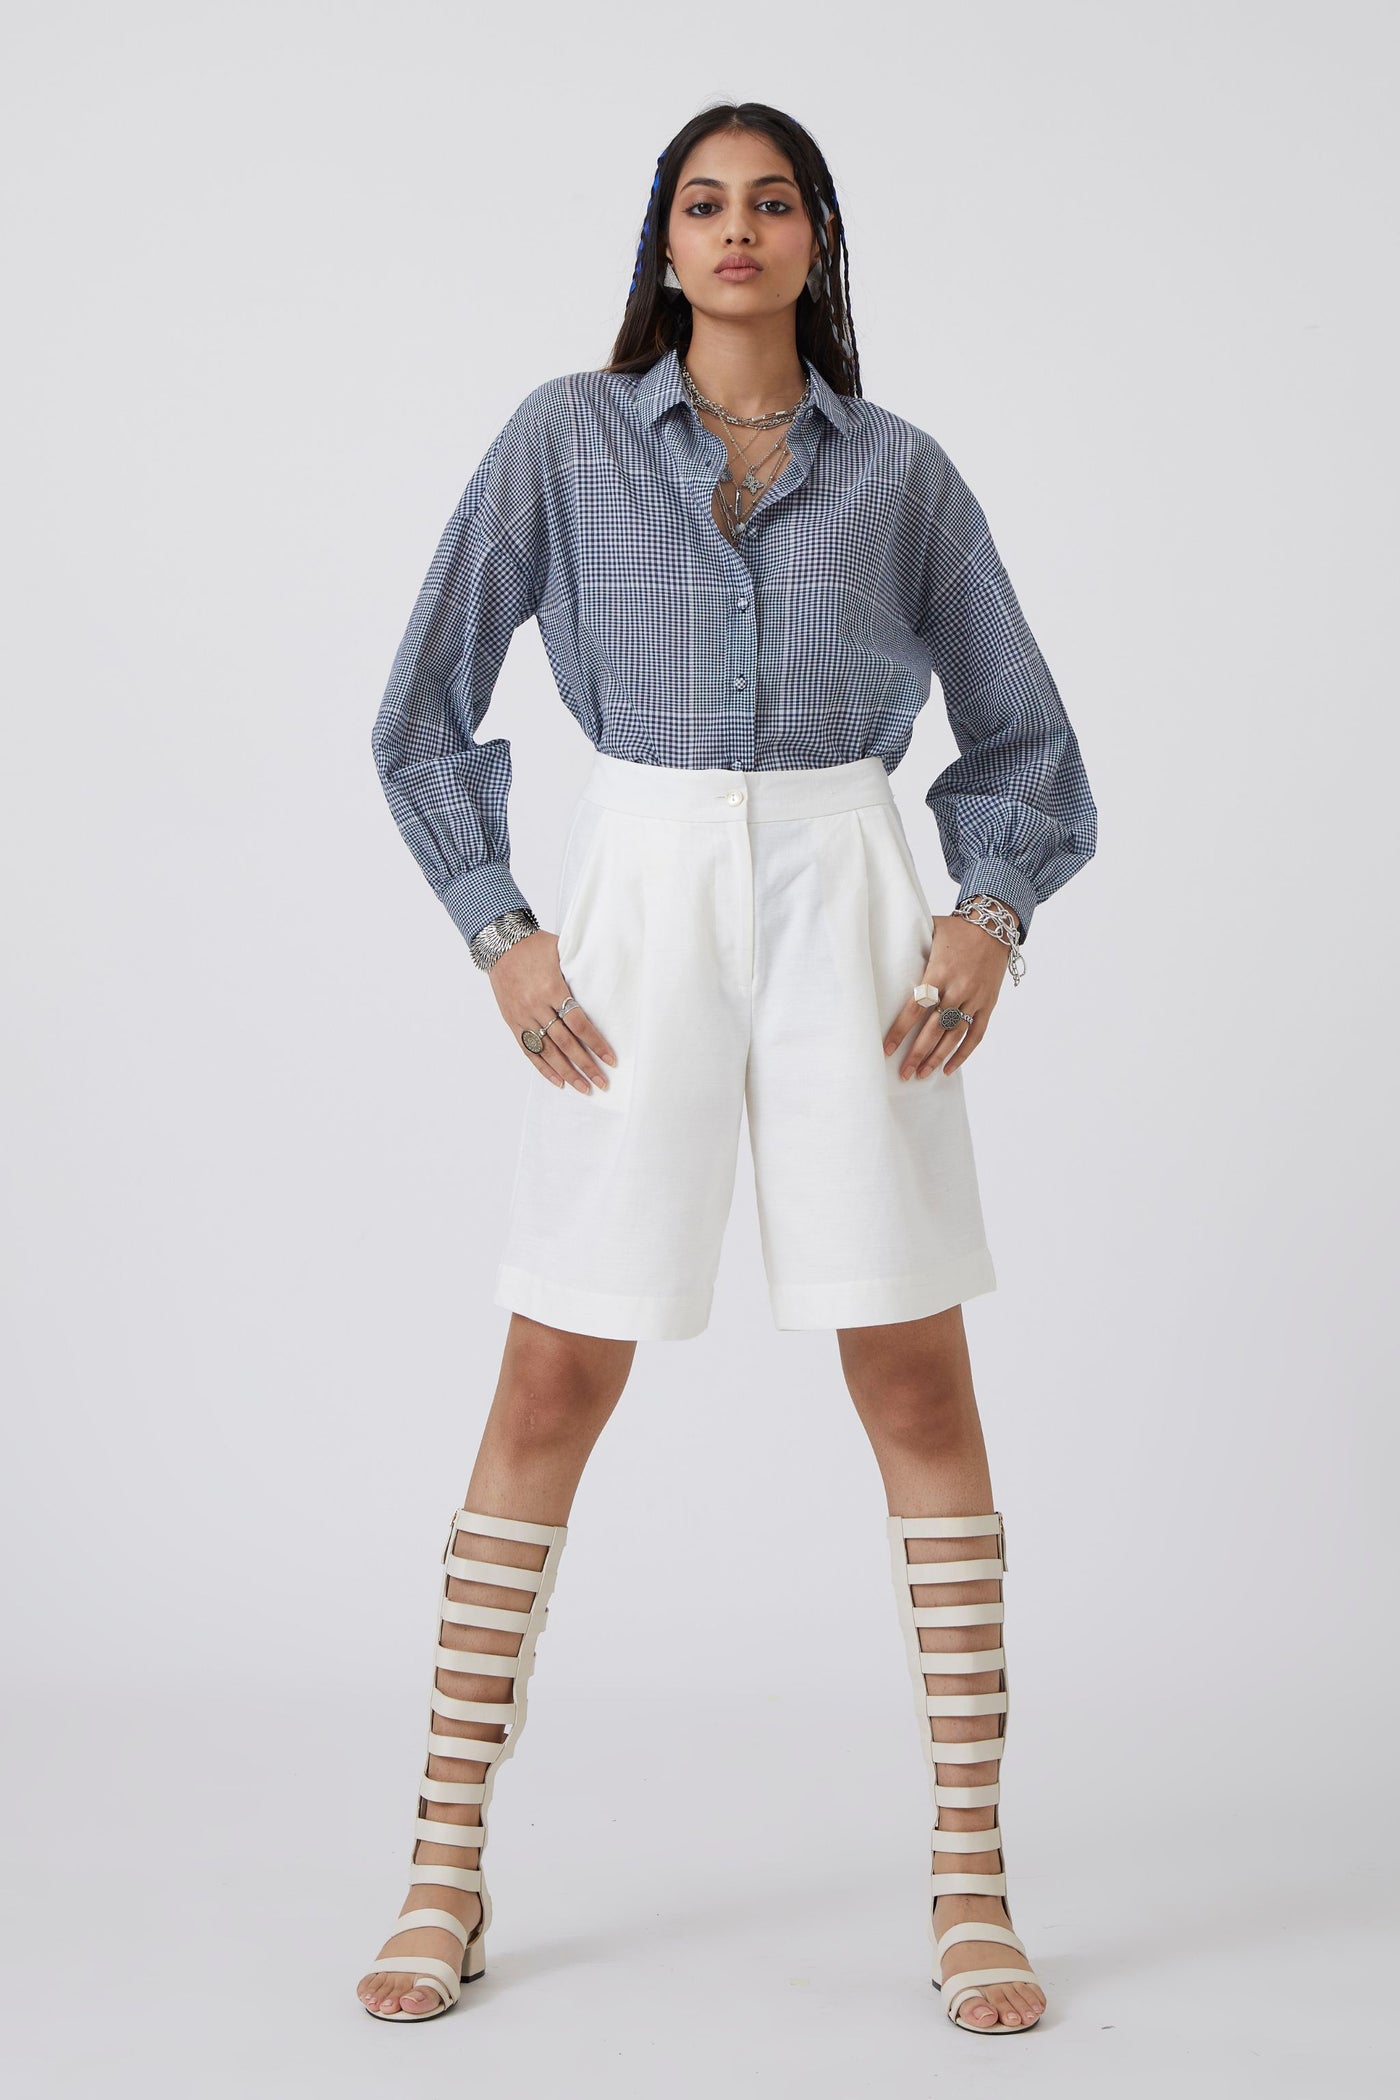 Tswalu Milk Shorts | Regular High-Waisted White Bermuda Shorts | Certified Organic Cotton Twill